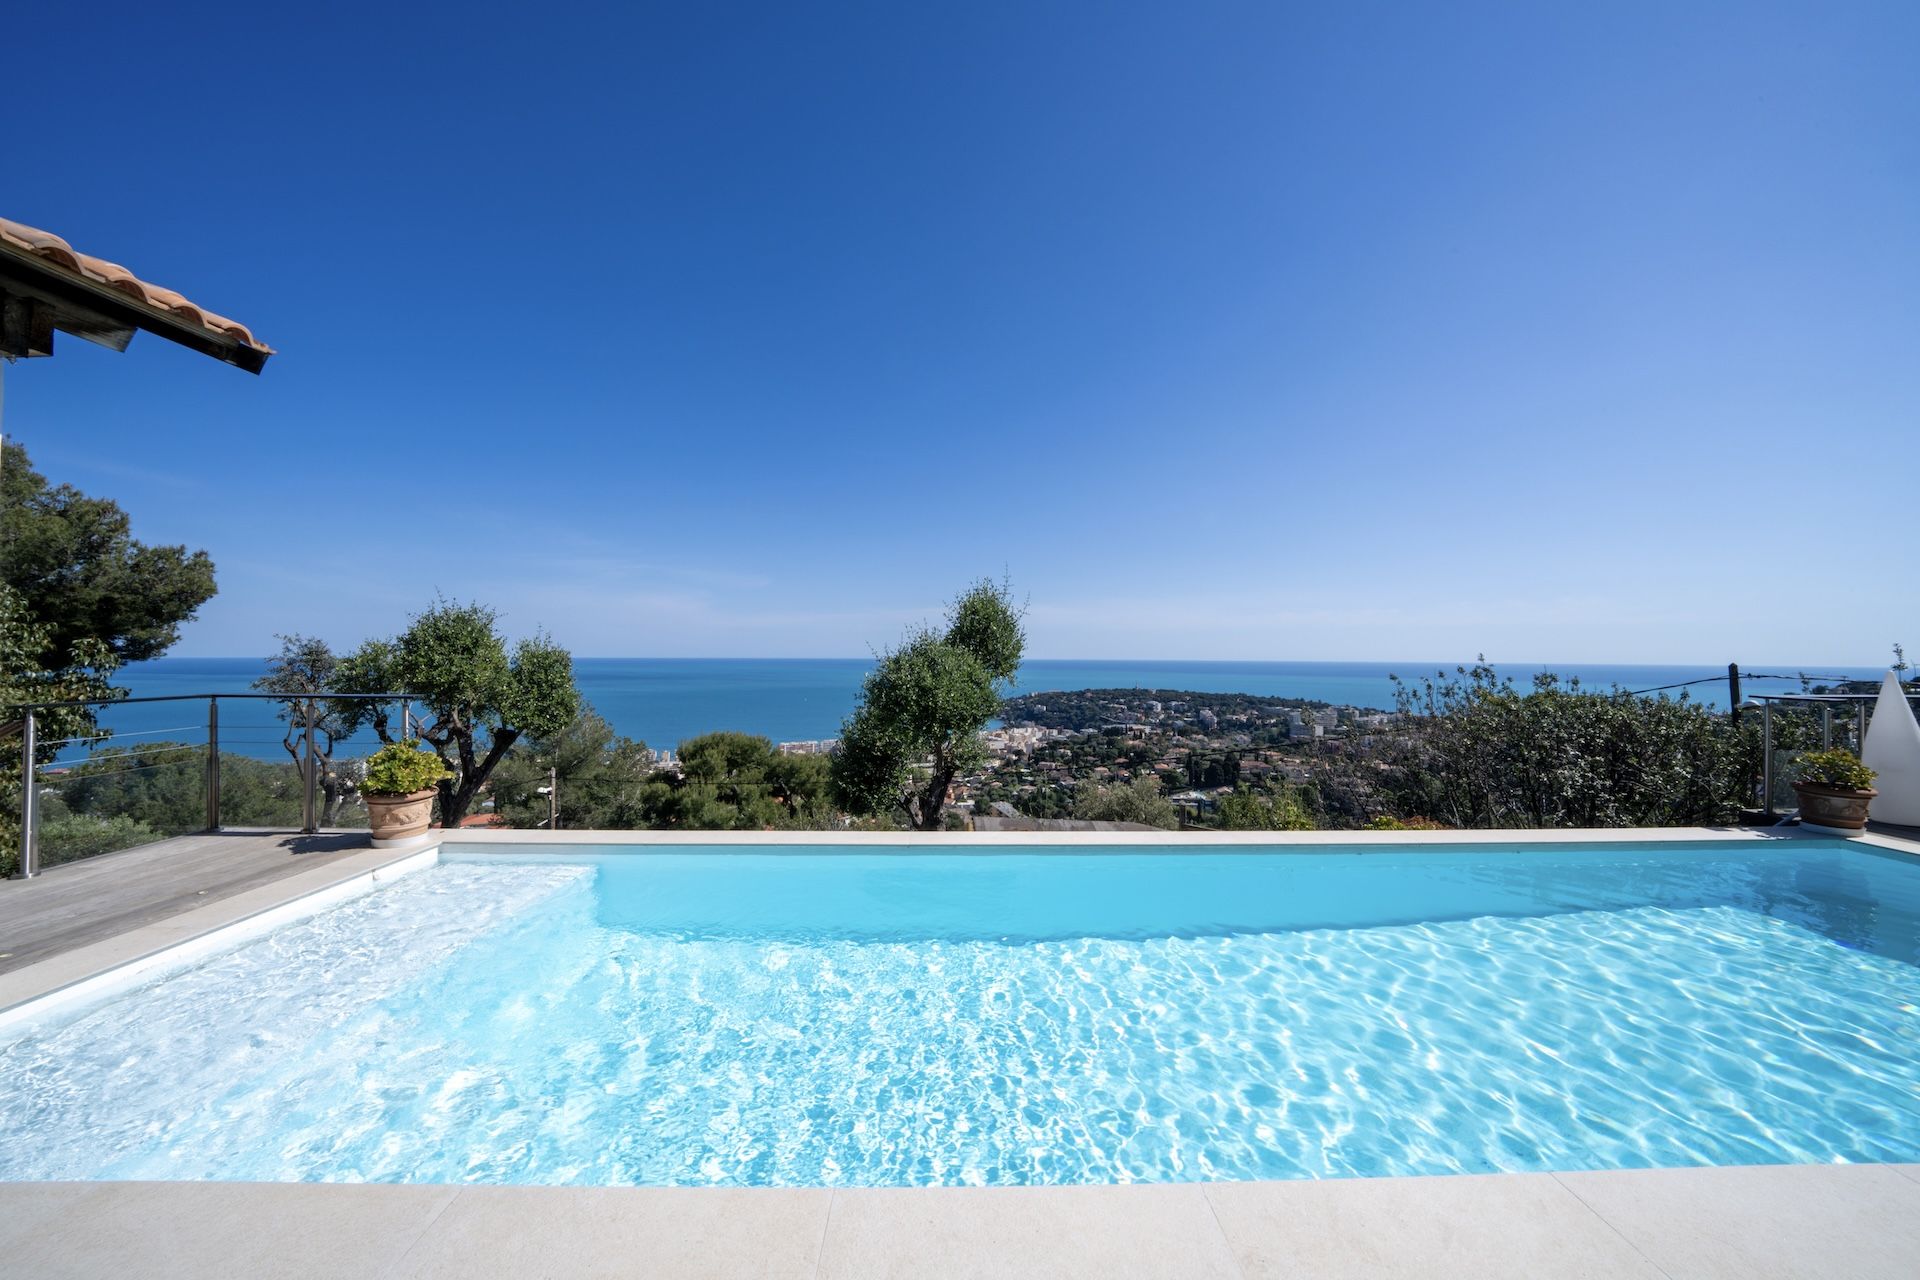 Méditerranée Location Villa with Private pool in Roquebrune-Cap-Martin, Côte d'Azur